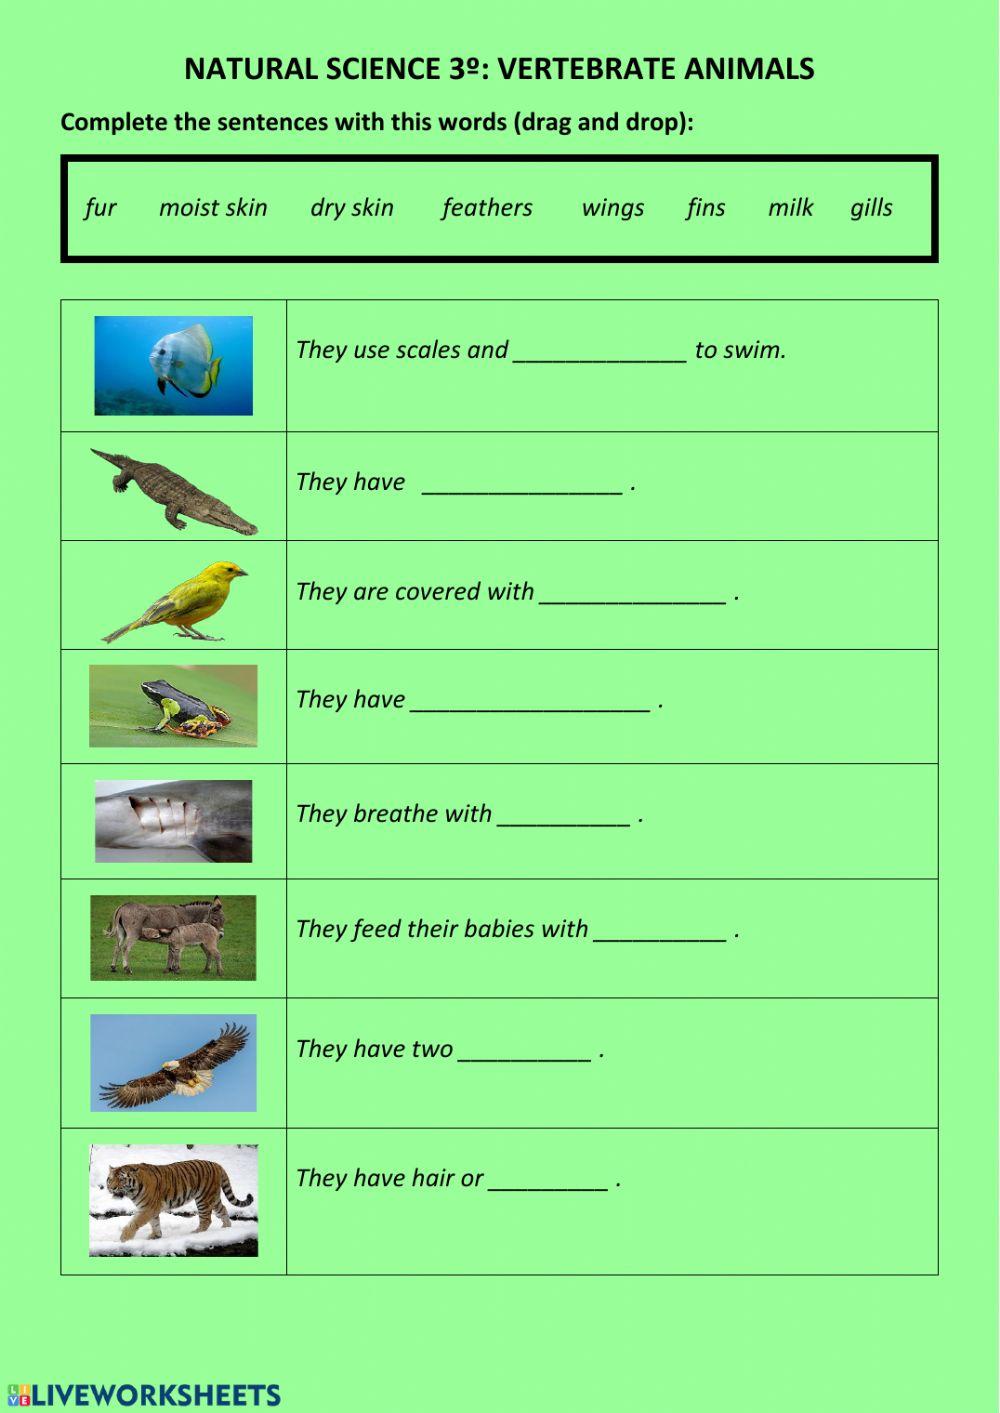 Complete sentences about vertebrate animals